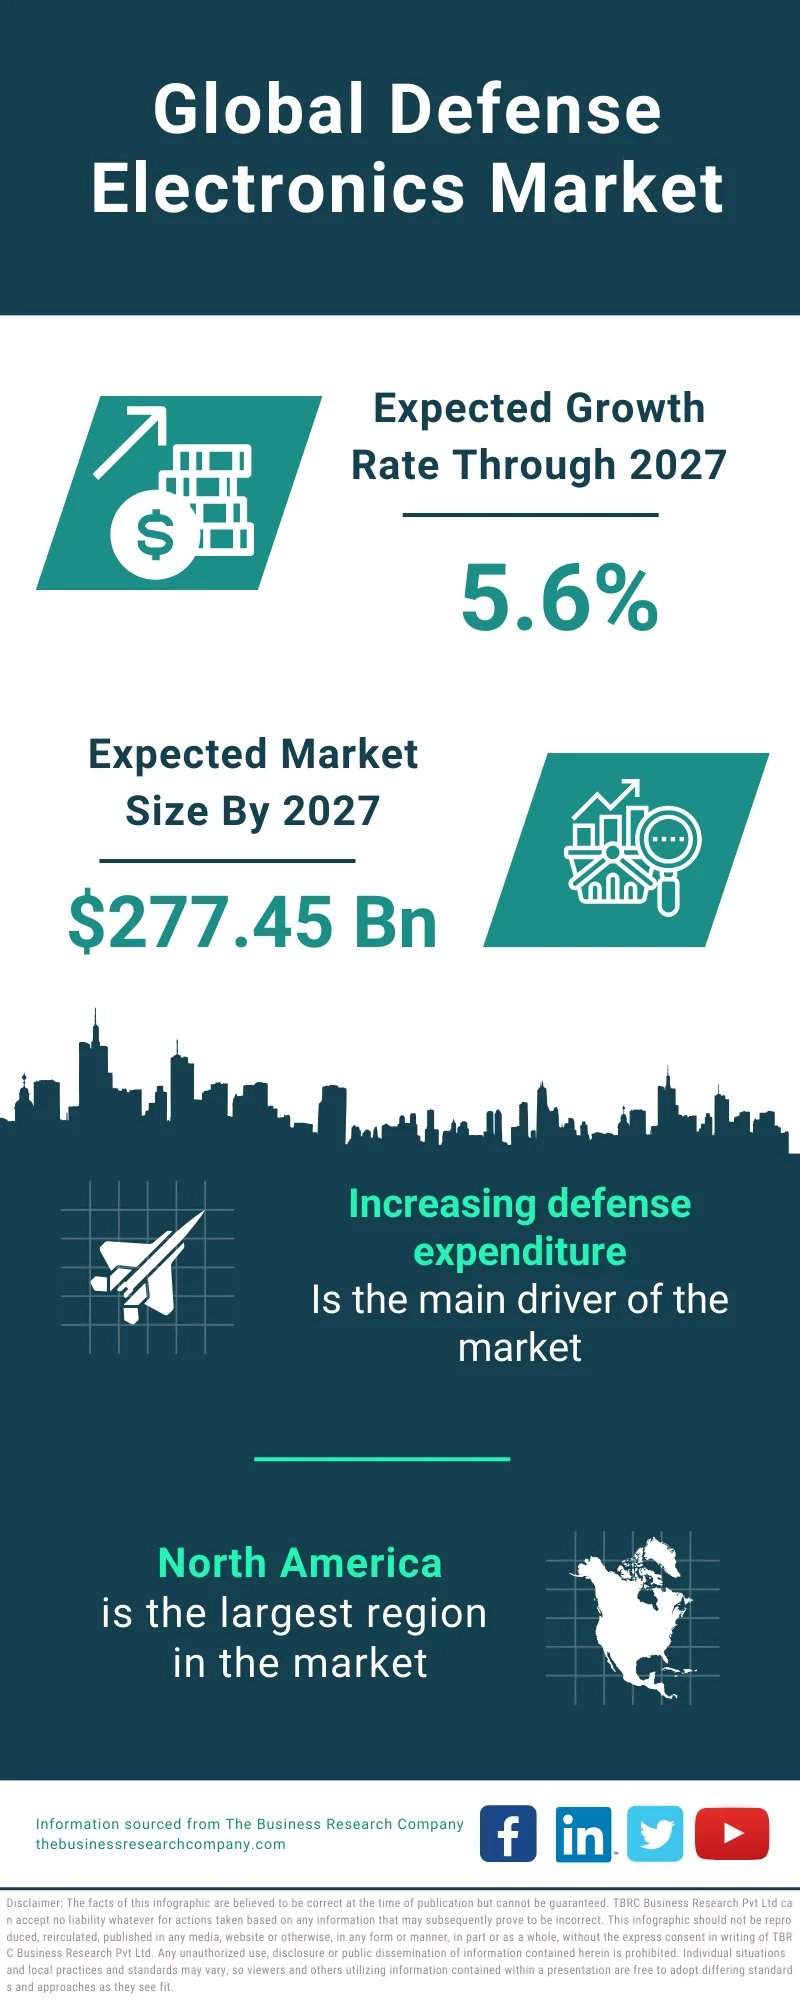 Defense Electronics Global Market Report 2023